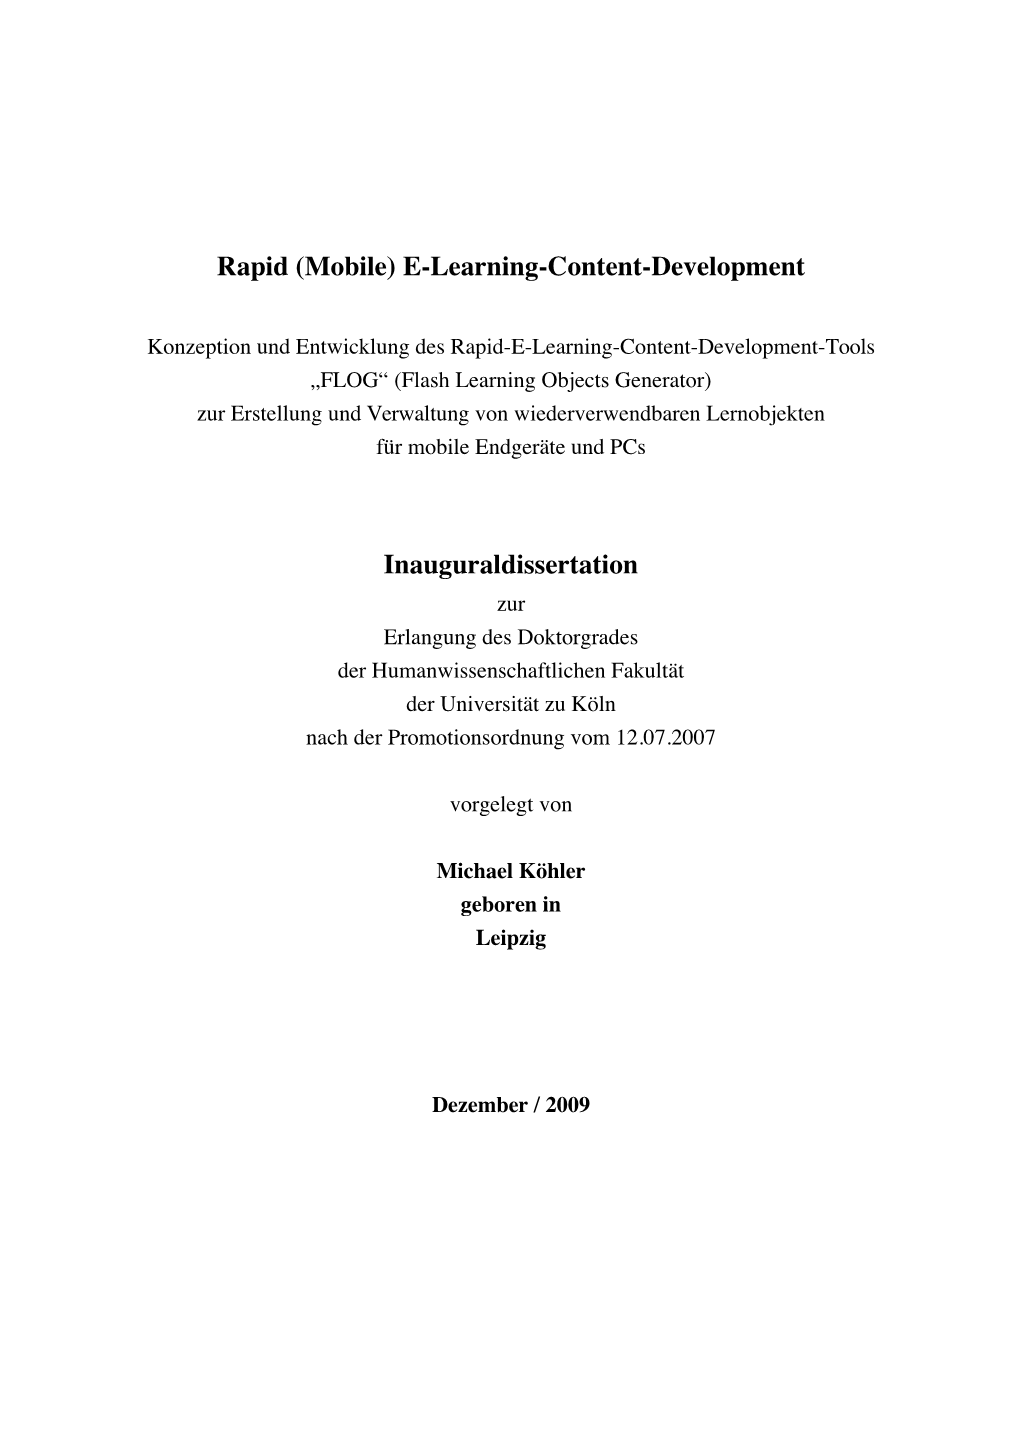 E-Learning-Content-Development Inauguraldissertation